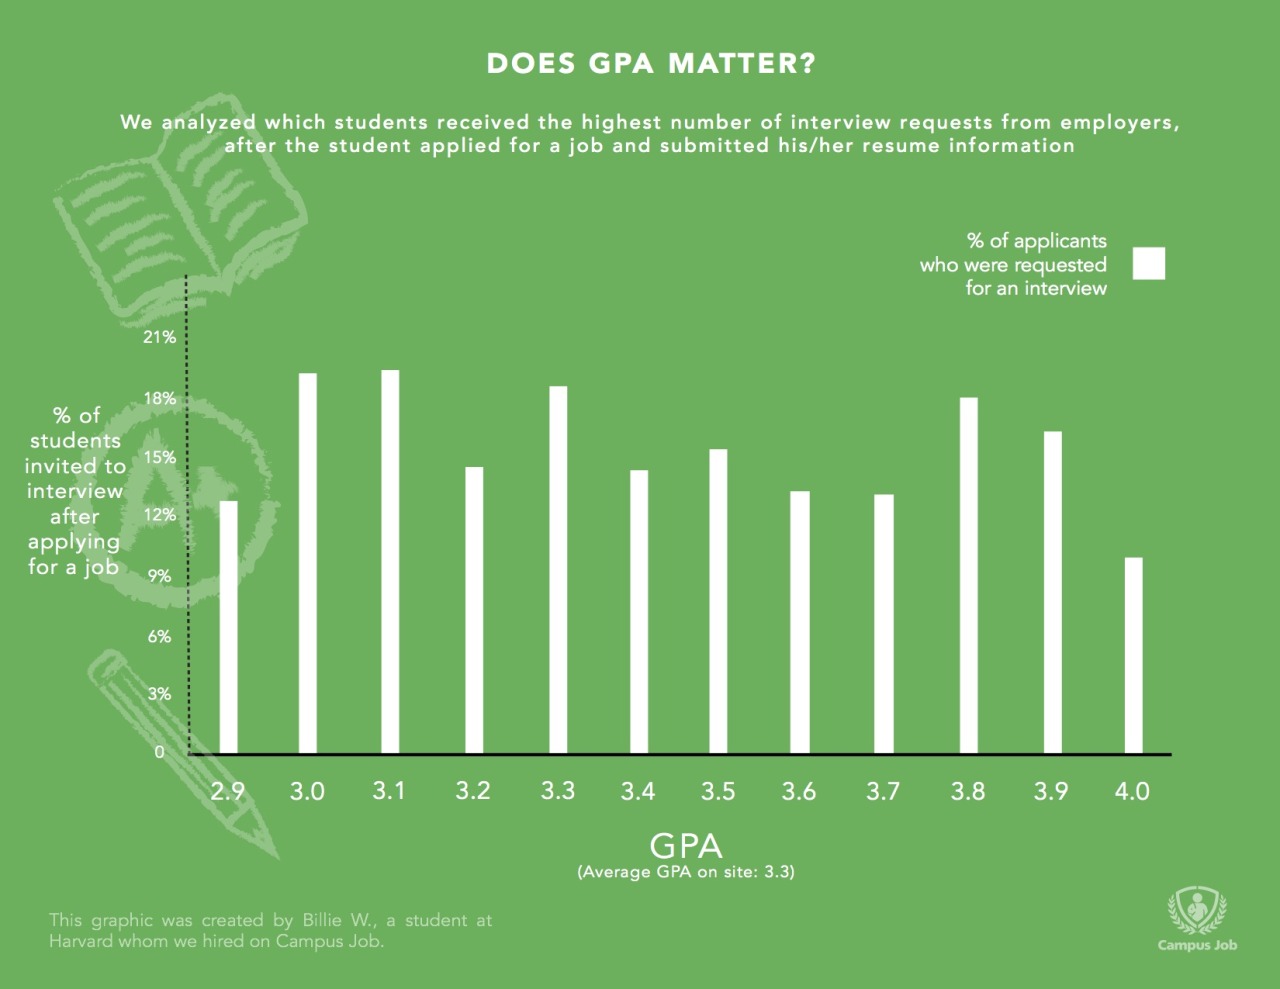 Does GPA Matter?